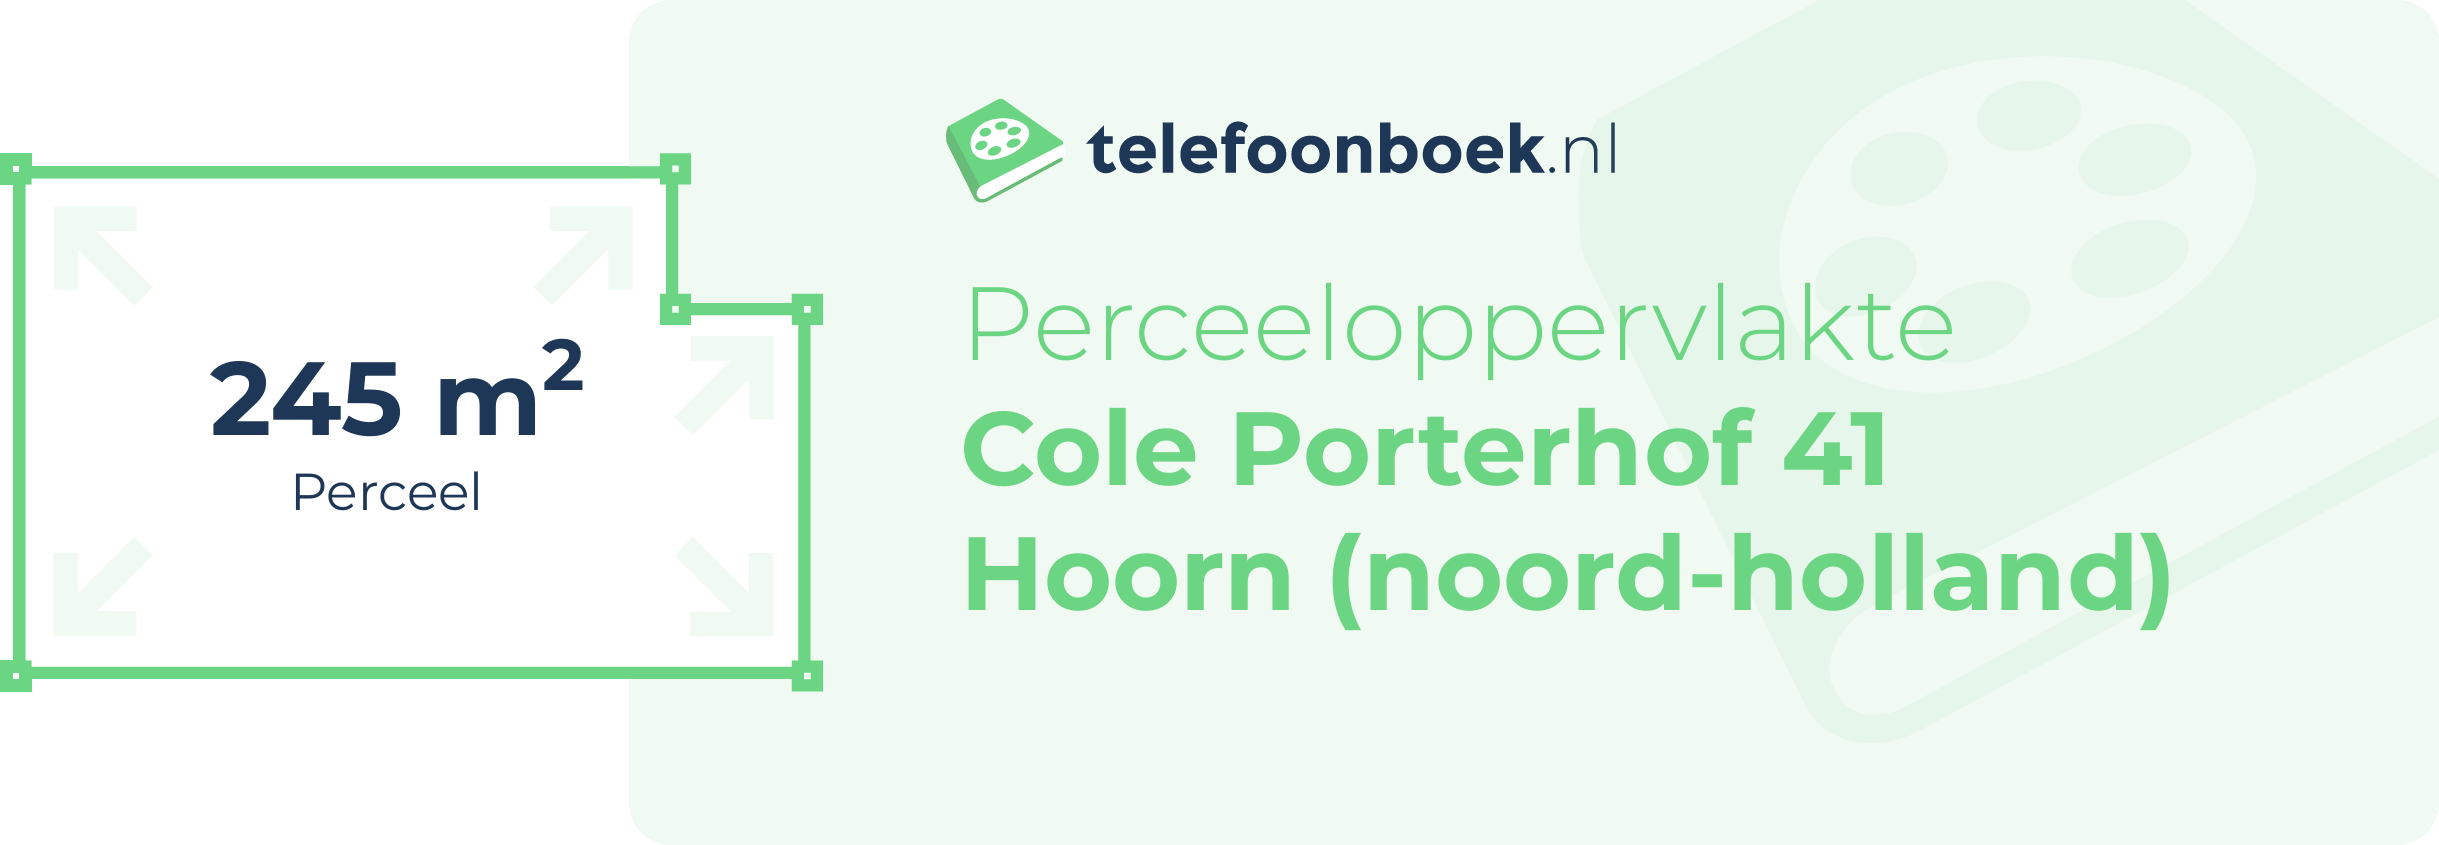 Perceeloppervlakte Cole Porterhof 41 Hoorn (Noord-Holland)